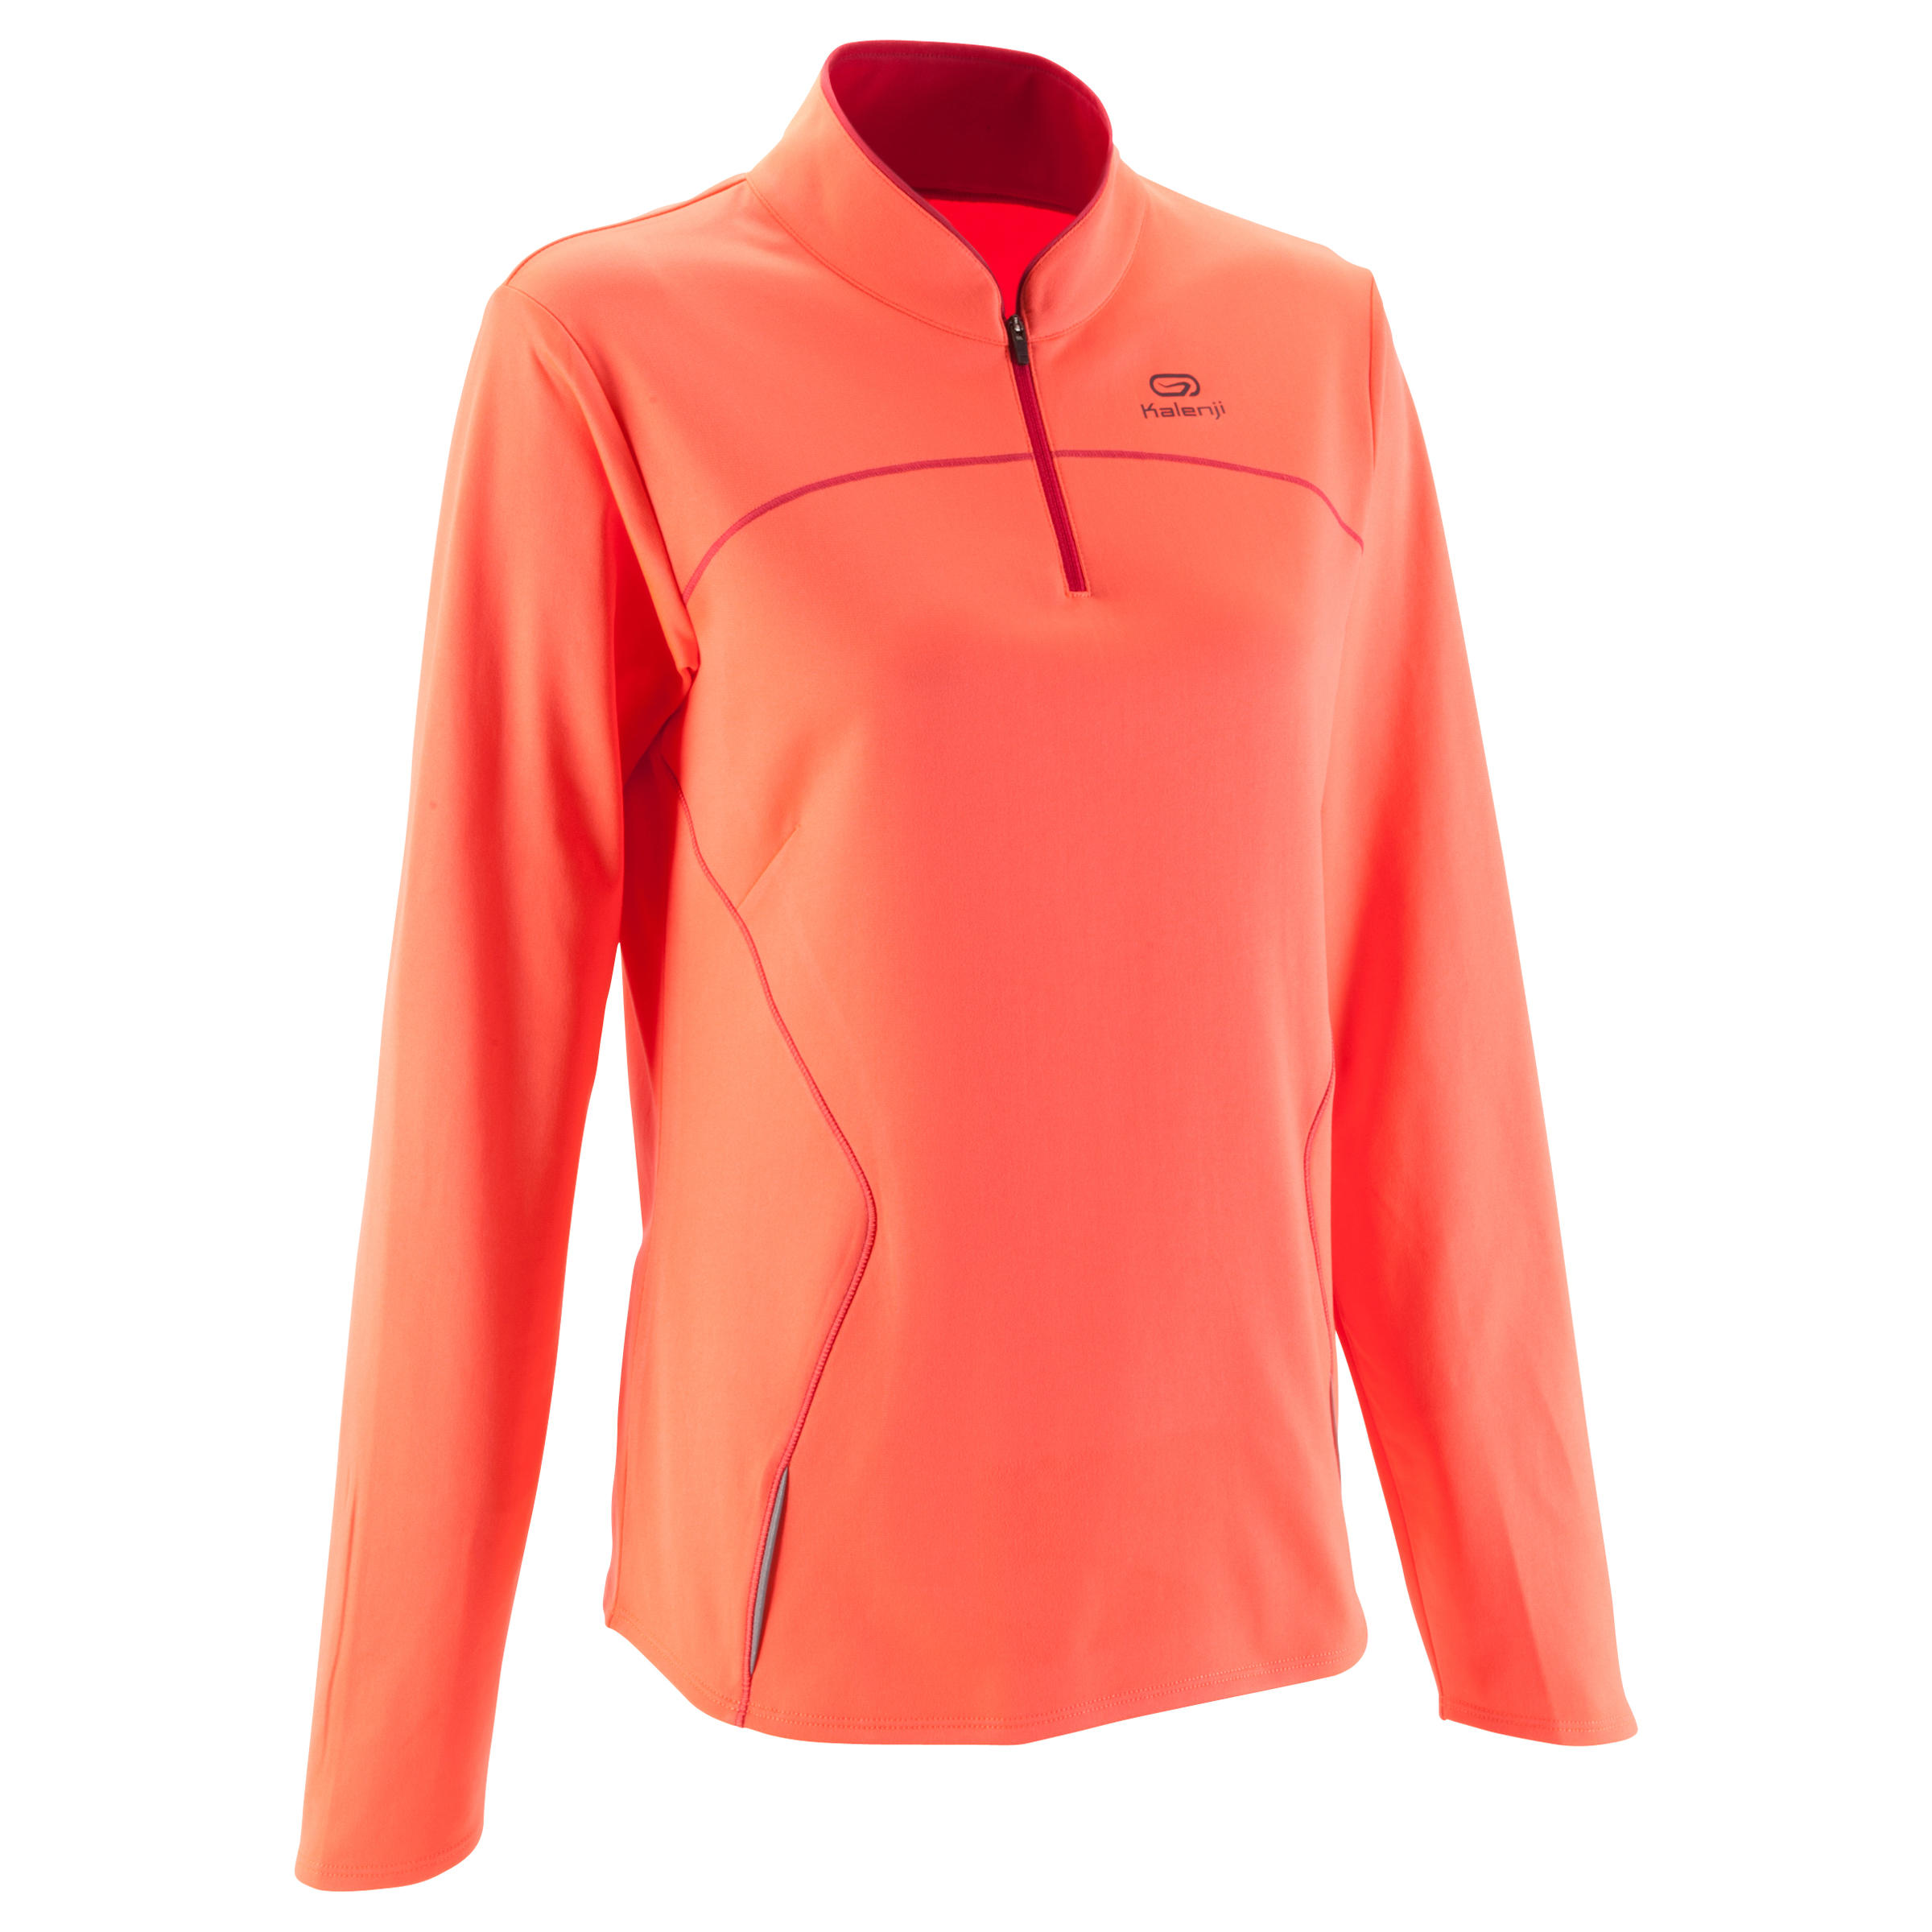 Kalenji Ekiden Women's Warm Long Sleeved Running Jersey - Orange/Grey 1/8